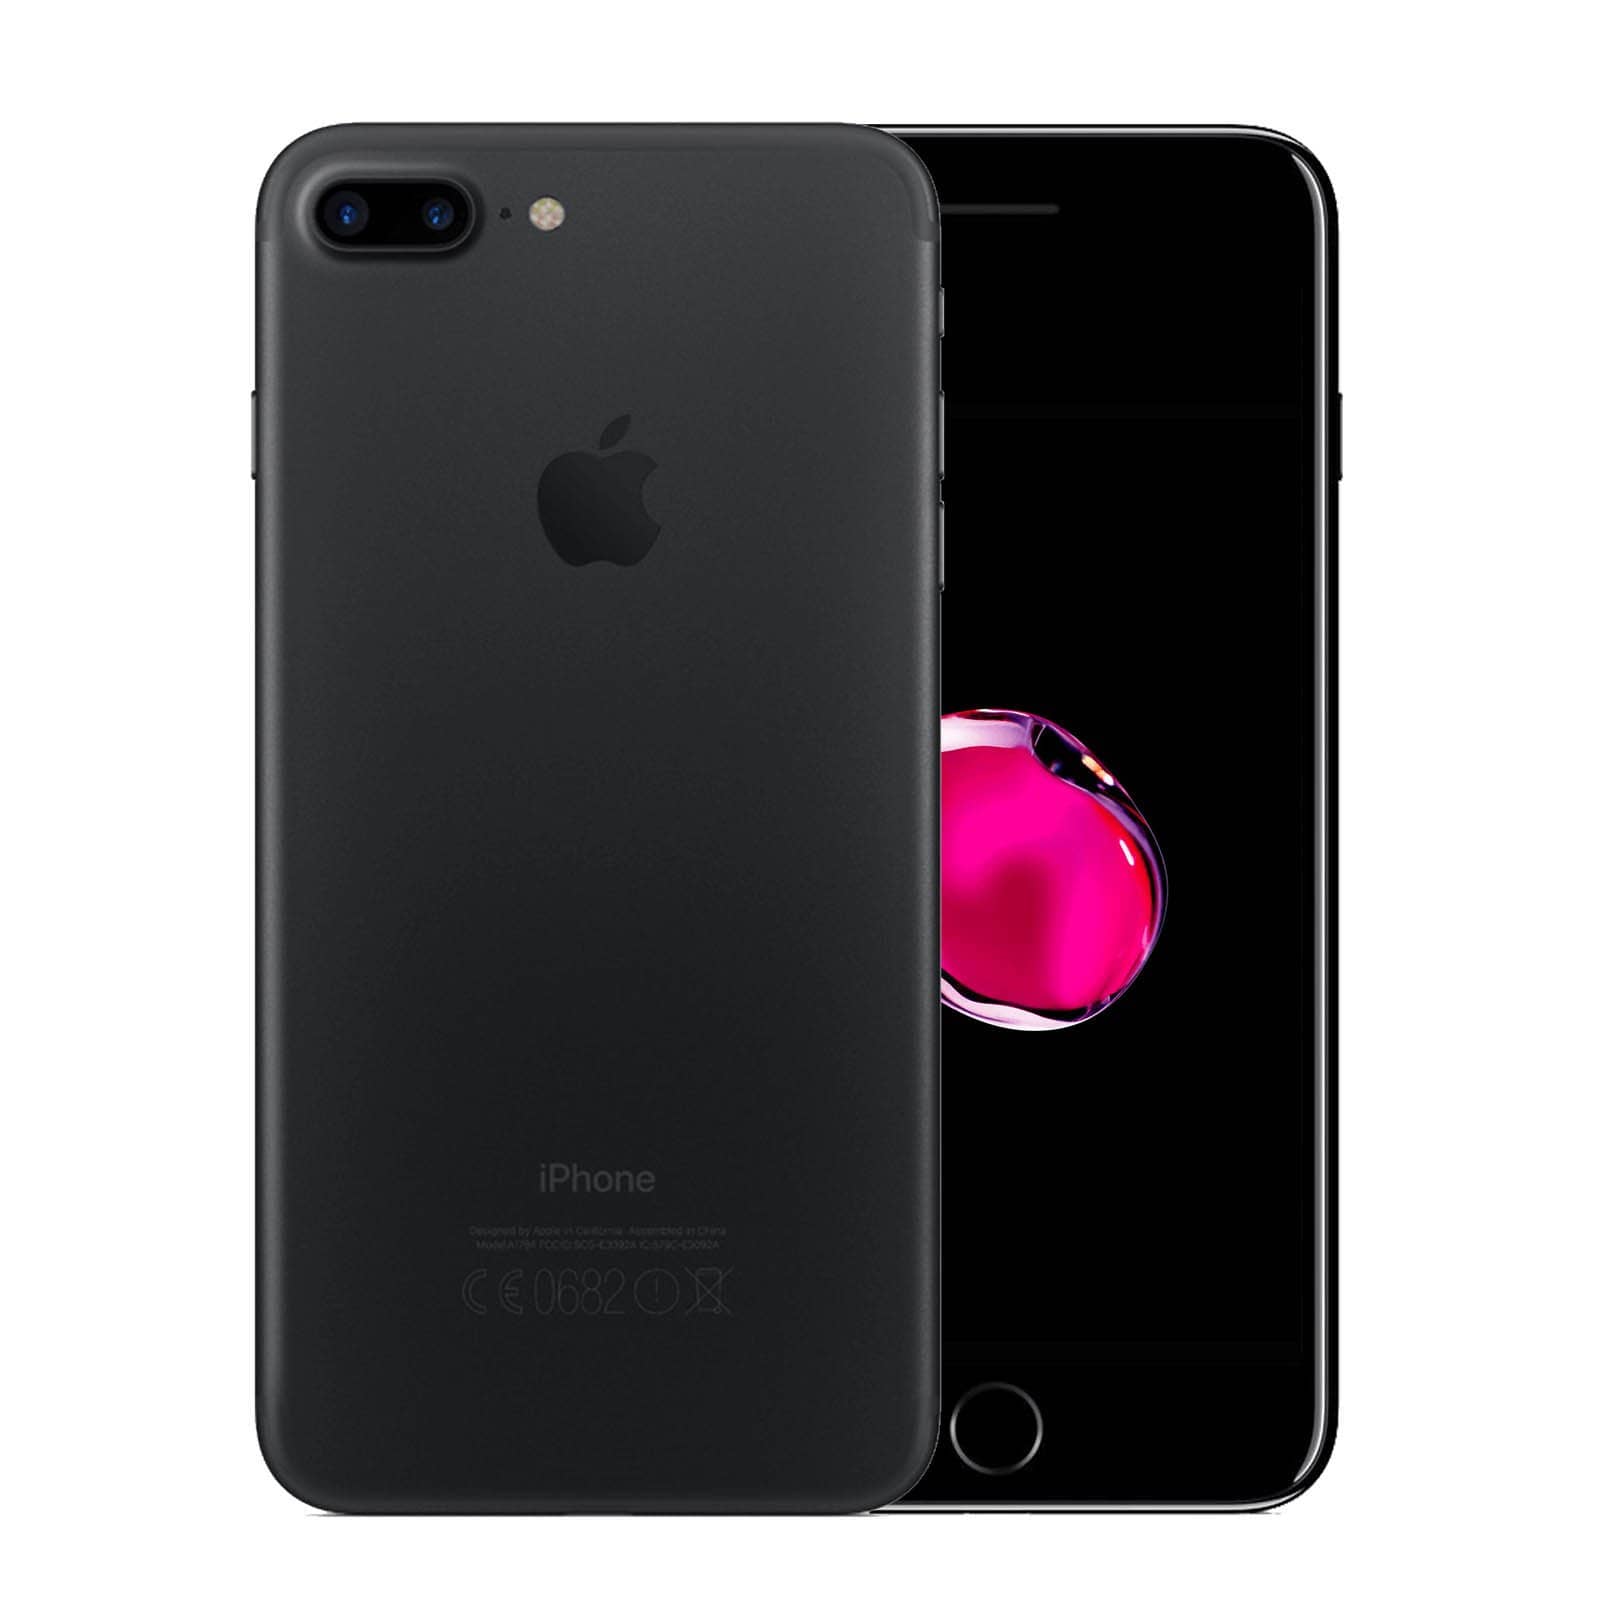 Apple iPhone 7 Plus 256GB Black Very Good - Unlocked 256GB Black Very Good